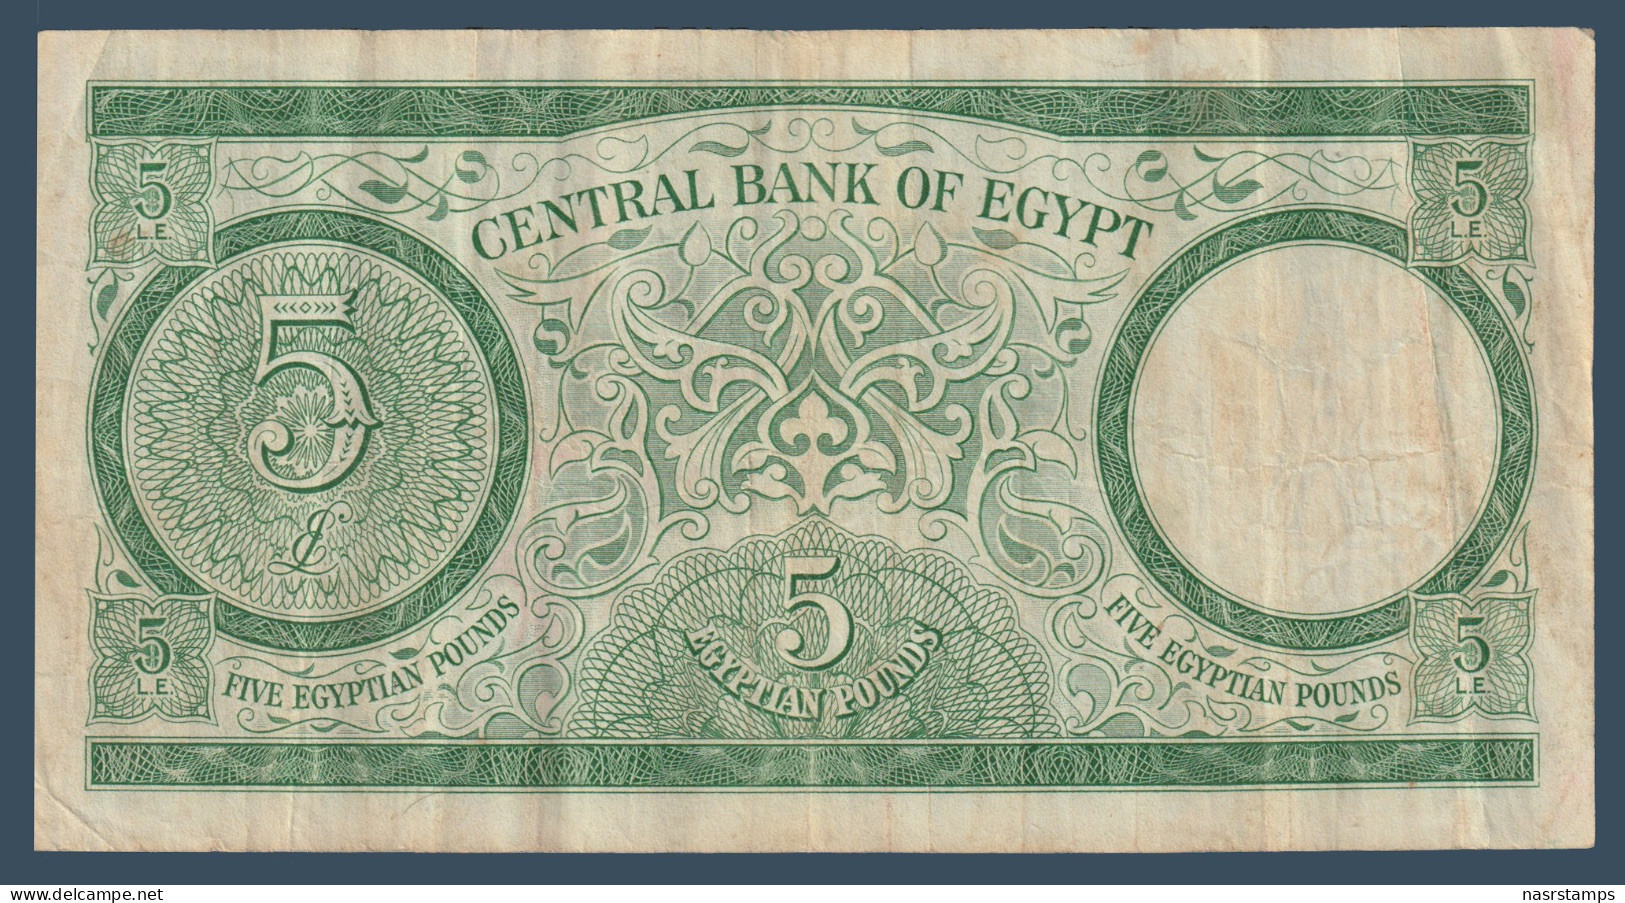 Egypt - 1962 - 5 Pounds - Pick-39 - Sign. #11 - Refay - V.F. - As Scan - Egipto